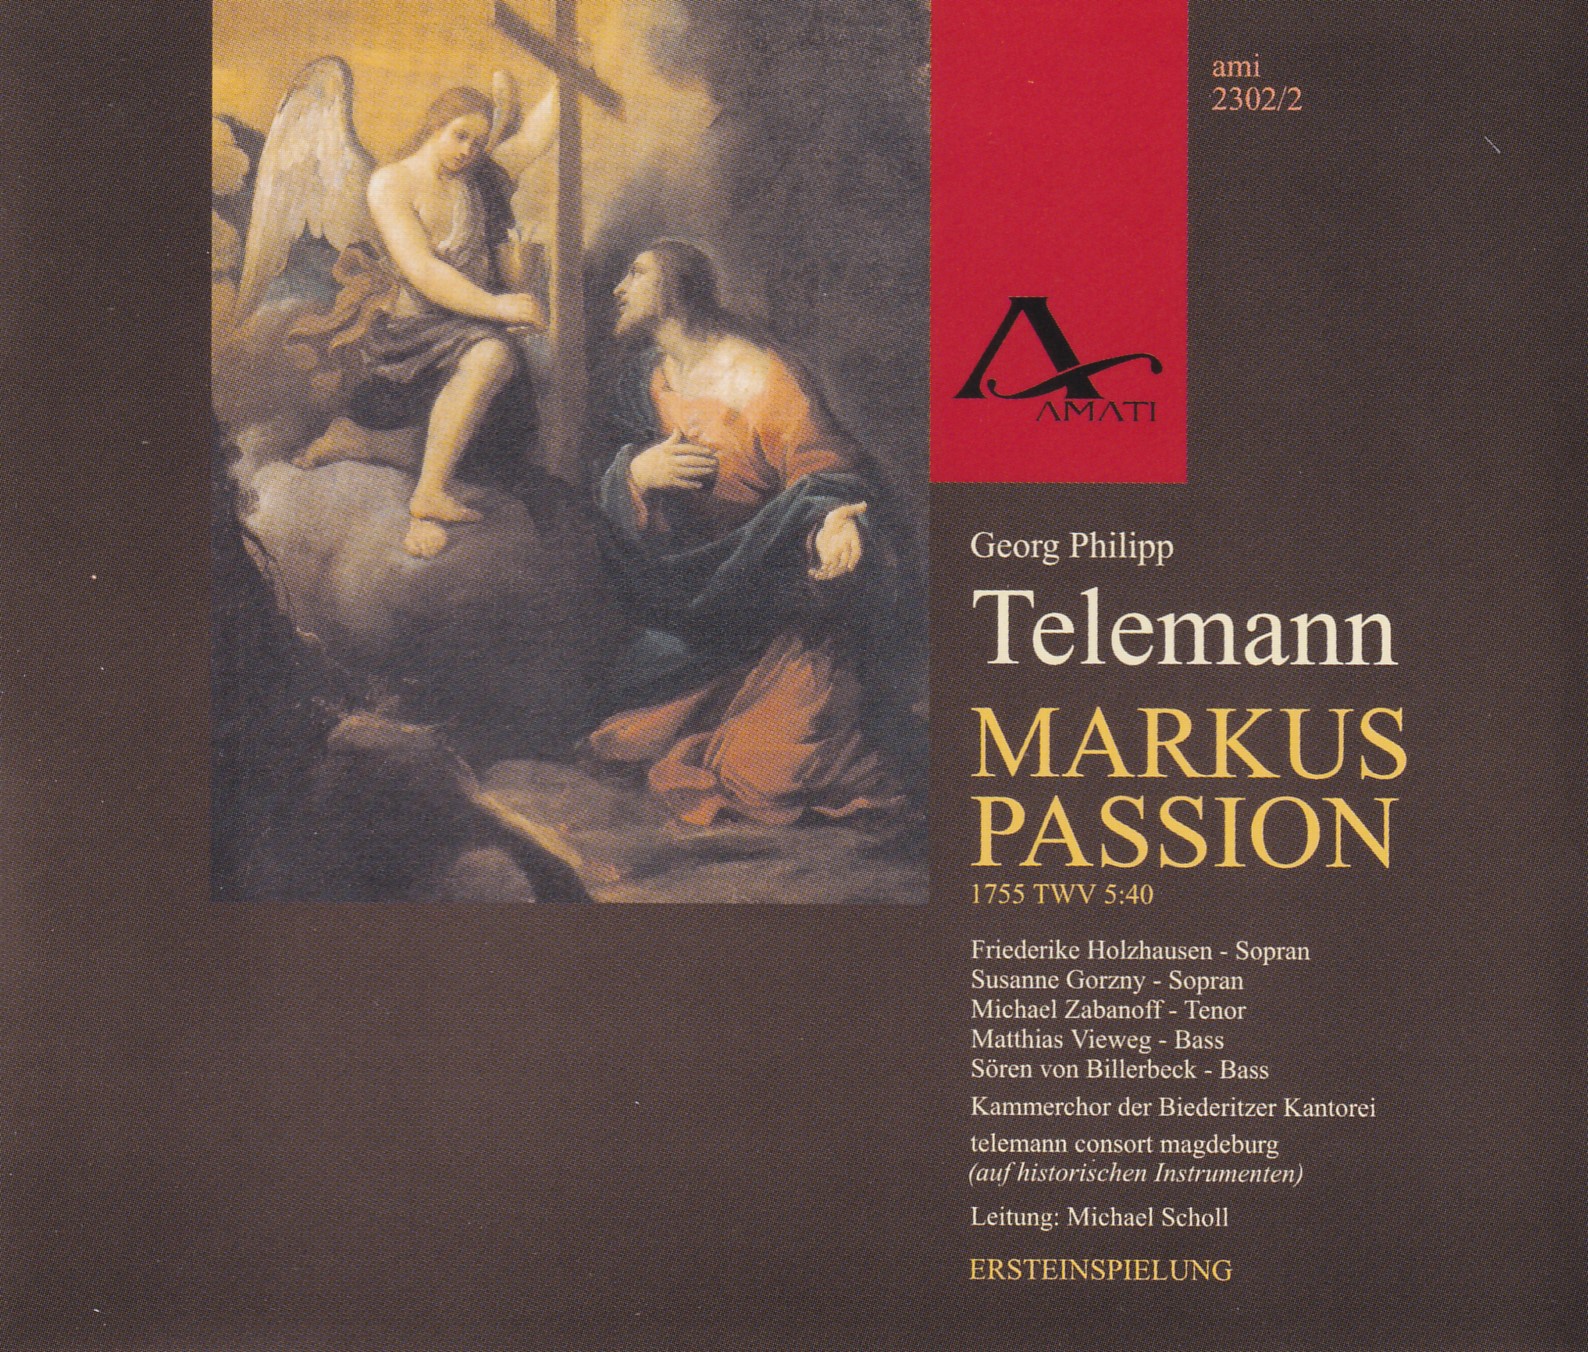 Georg Philipp Telemann -  Markus-Passion 1755   TWV 5:40